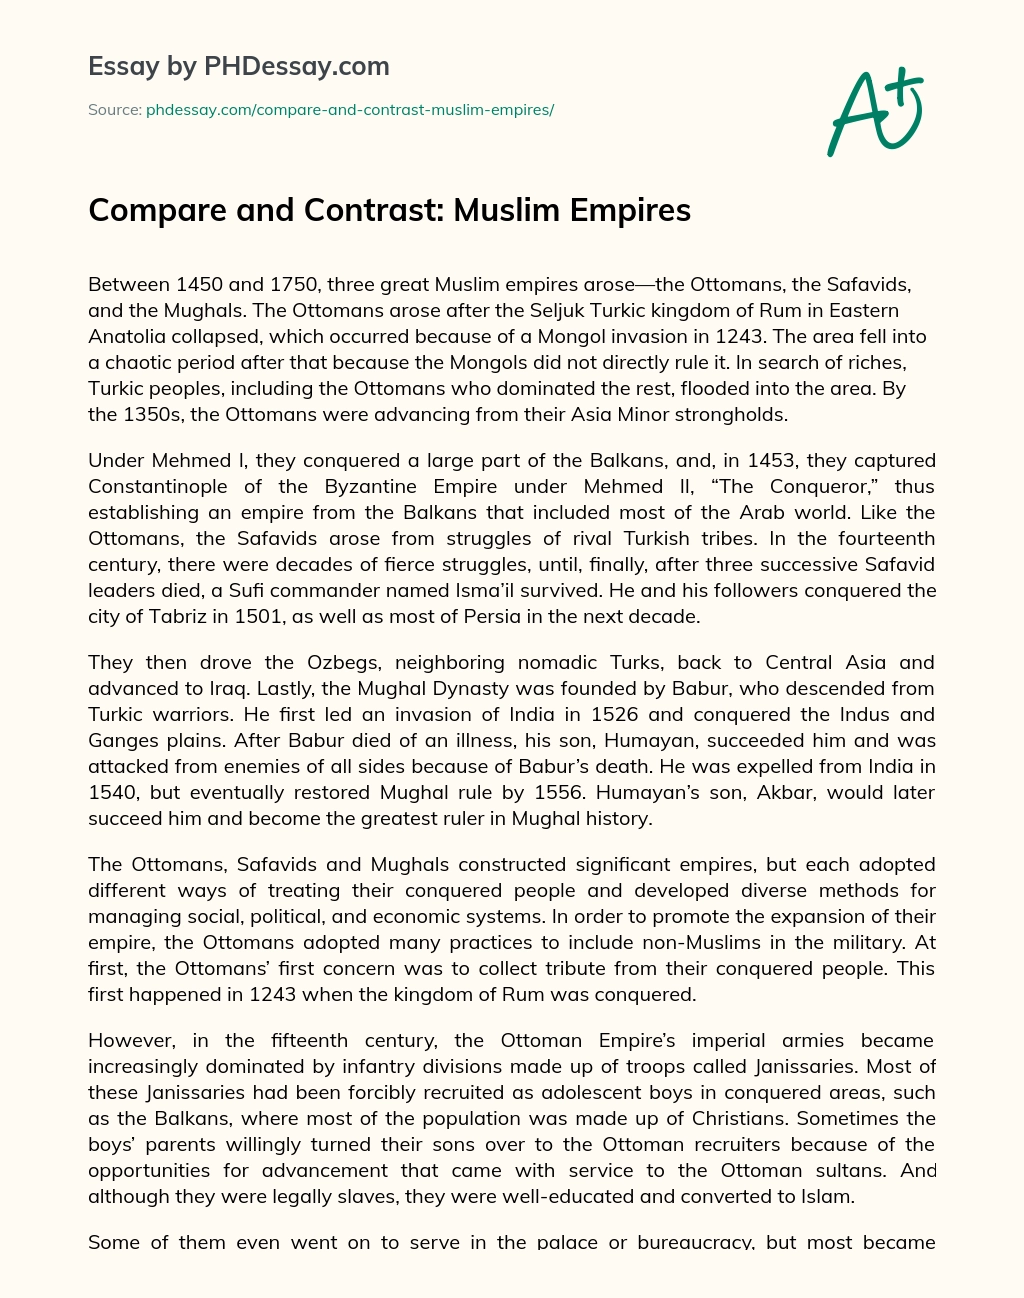 Compare and Contrast: Muslim Empires essay